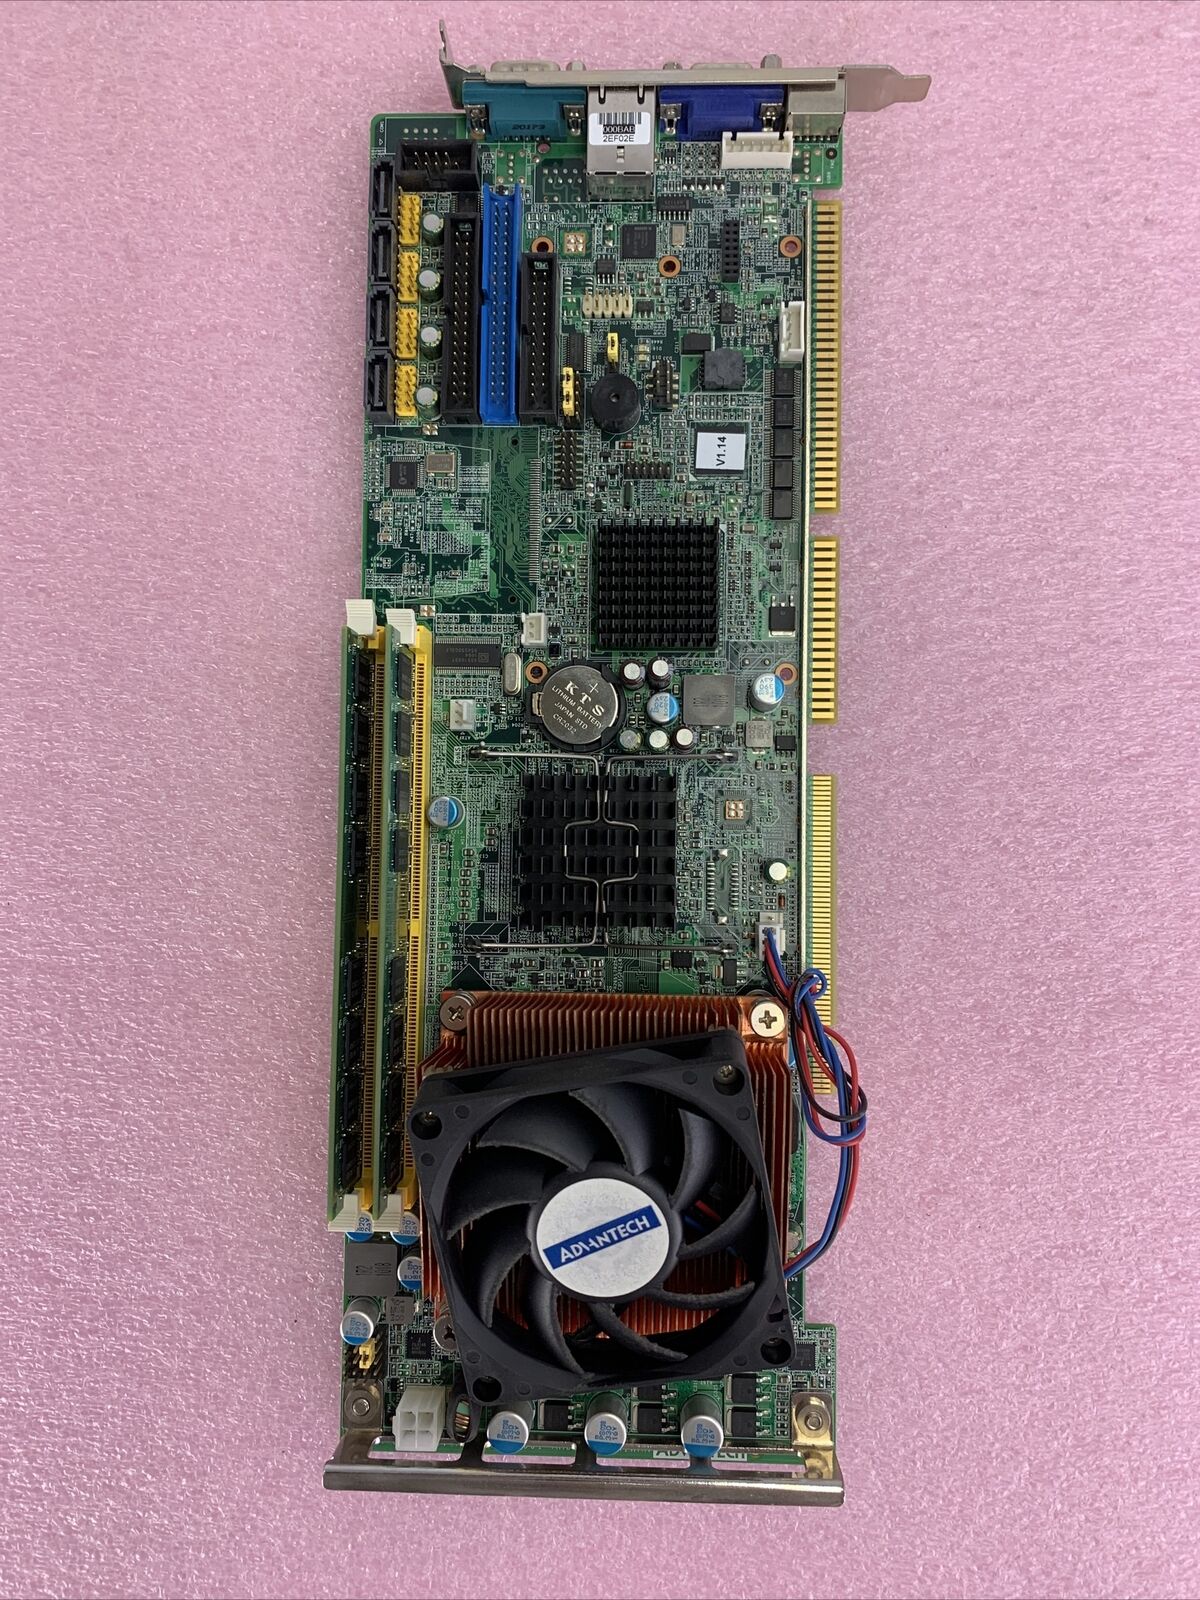 Advantech PVA 6010 Motherboard Intel Core 2 Duo 2.8GHz 3.25GB RAM